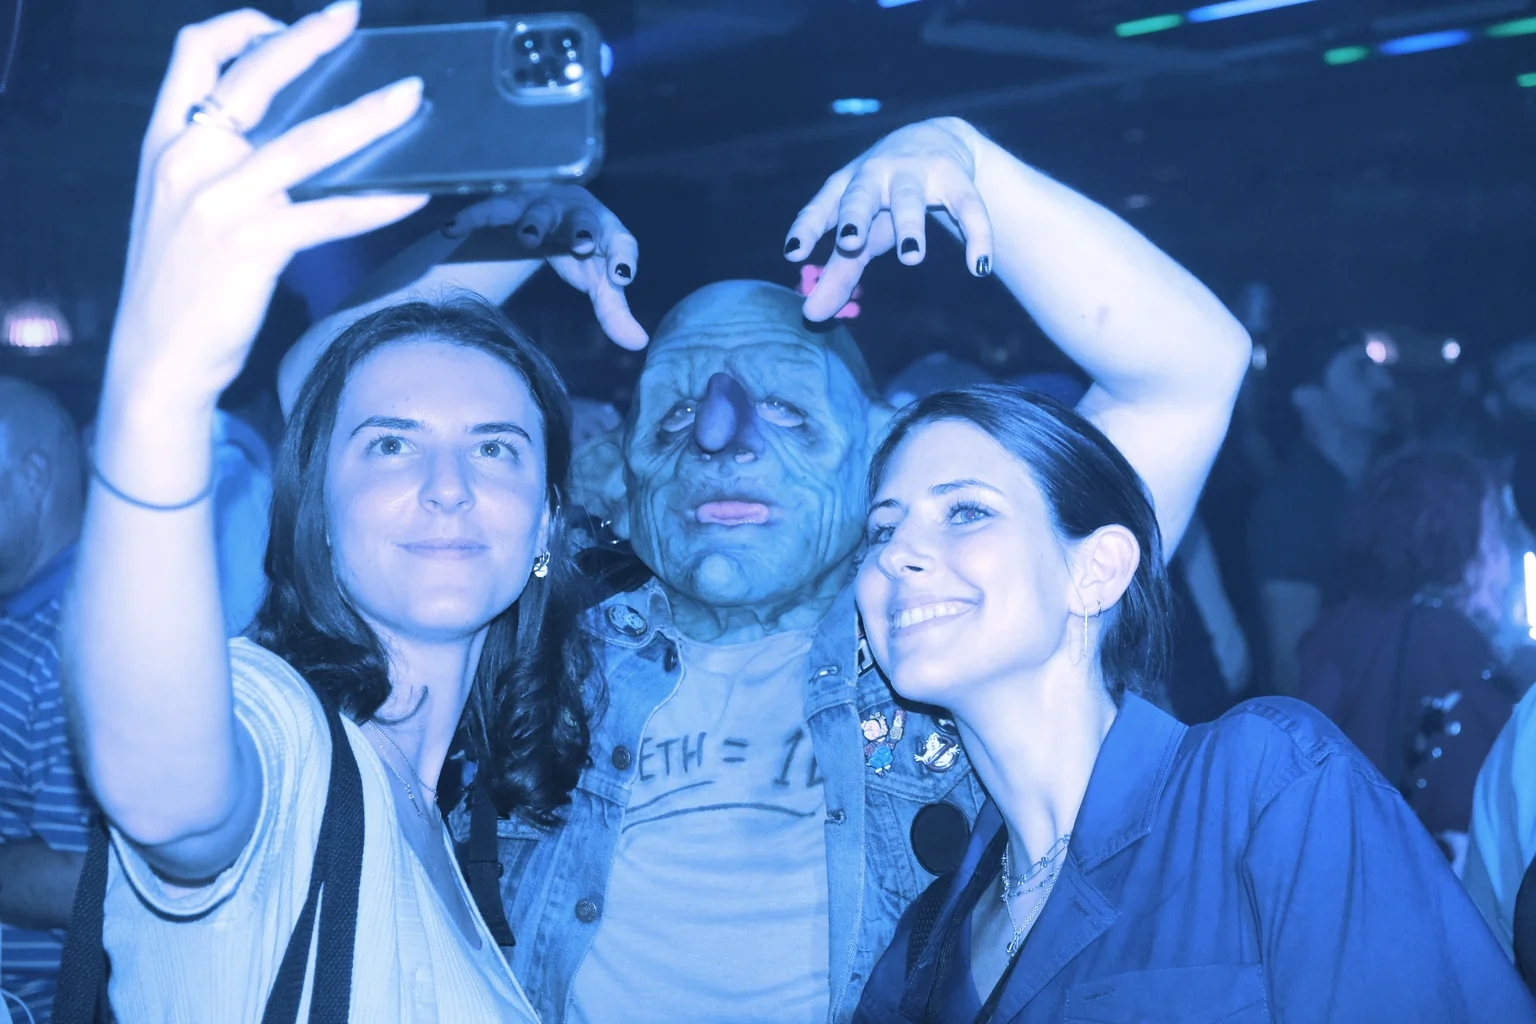 Goblintown NFT partygoers on June 21, 2022 in Manhattan. (Photo: André Beganski / Decrypt)